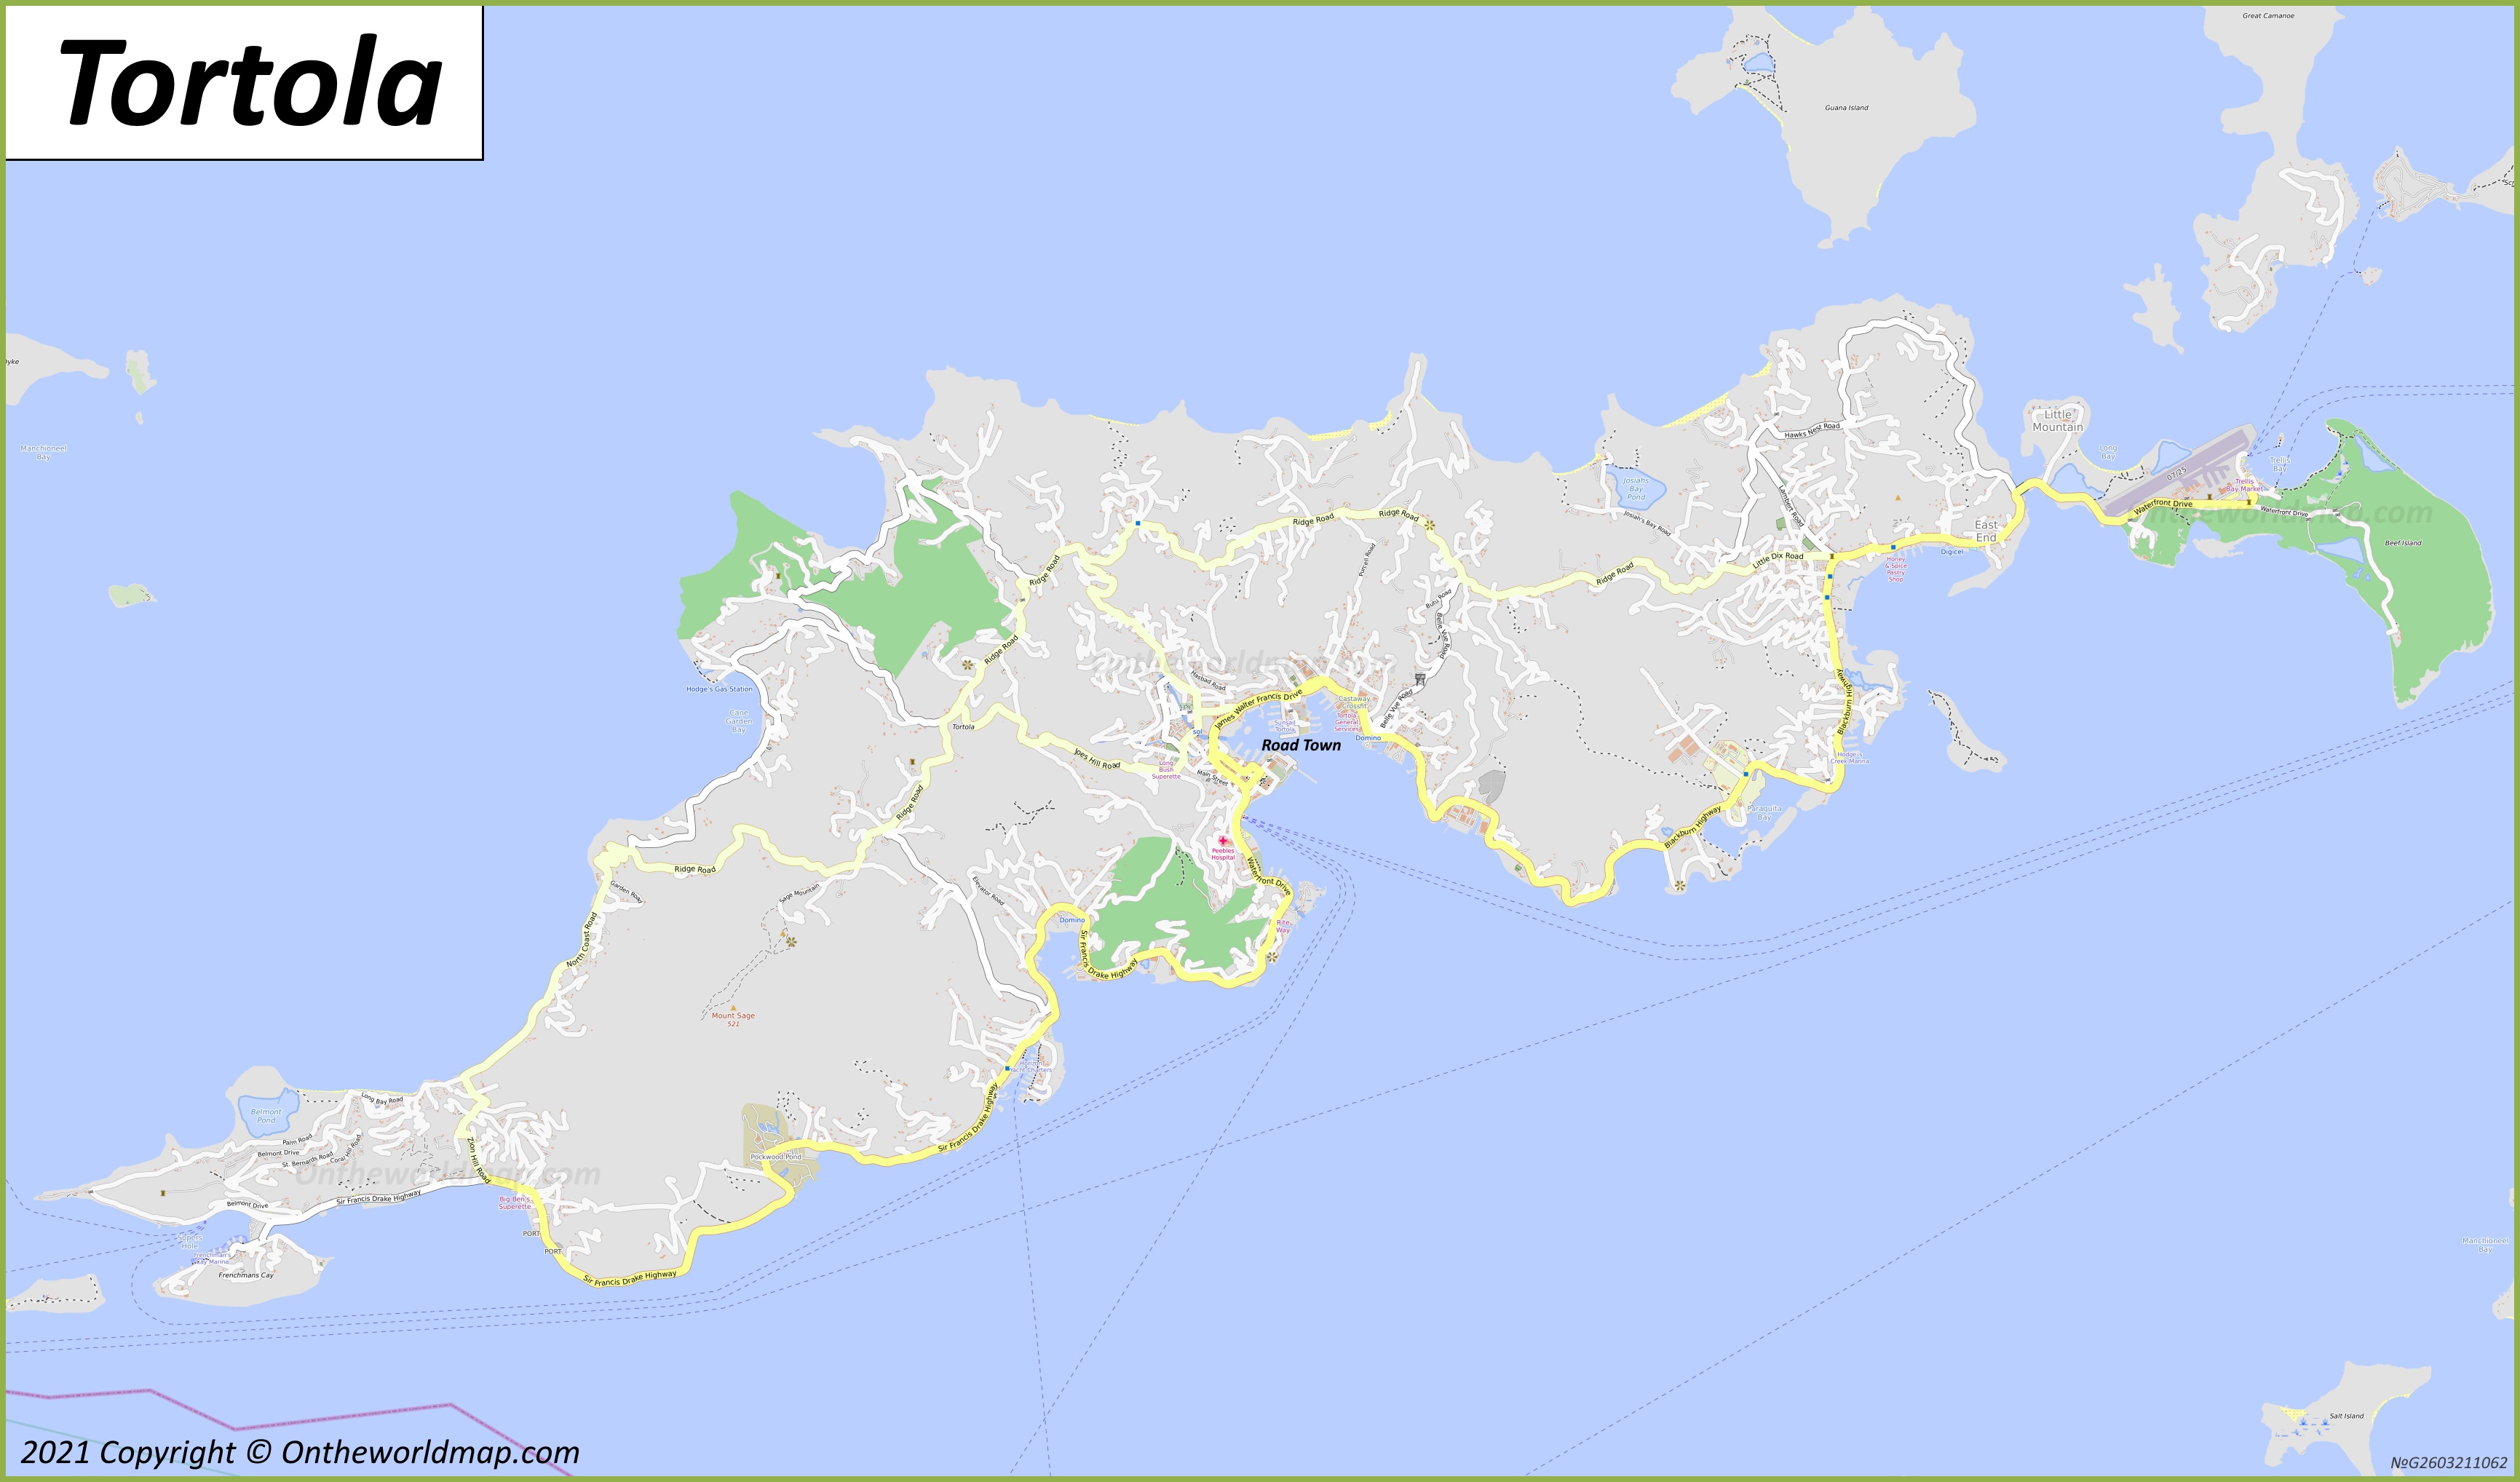 Detailed Map of Tortola Island